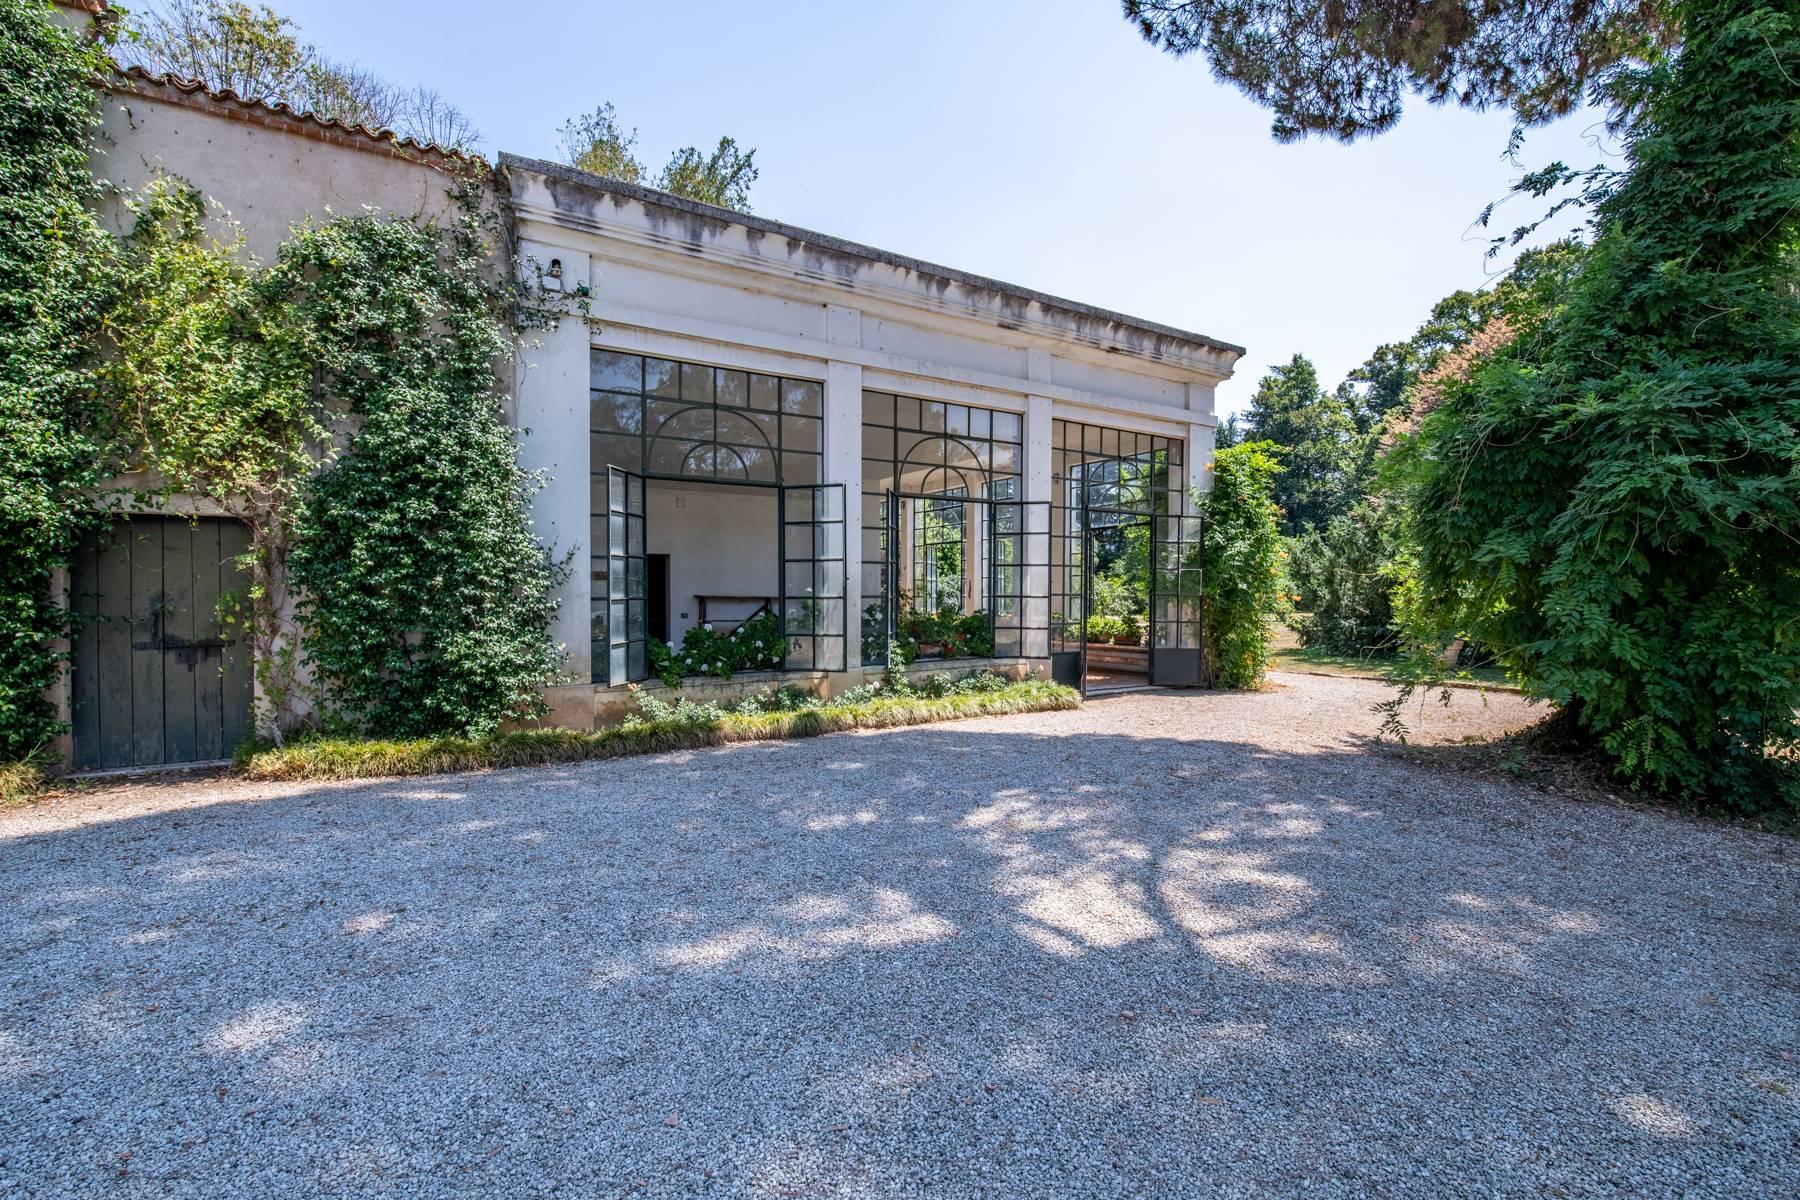 Elegante Villa Veneta con parco romantico e adiacenze - 31